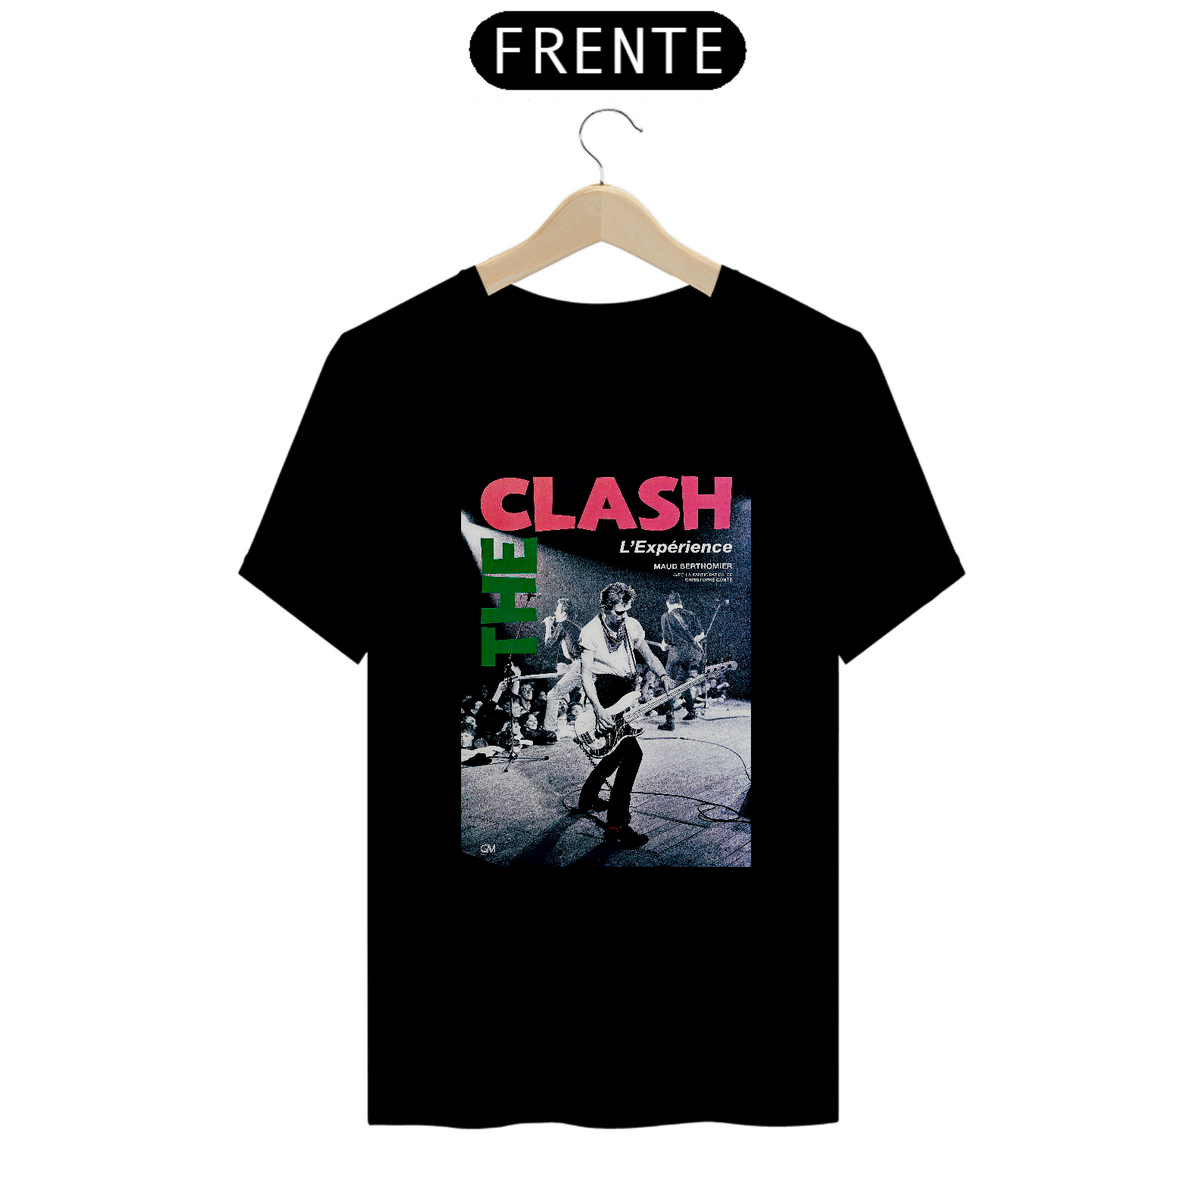 Nome do produto: The Clash Experience